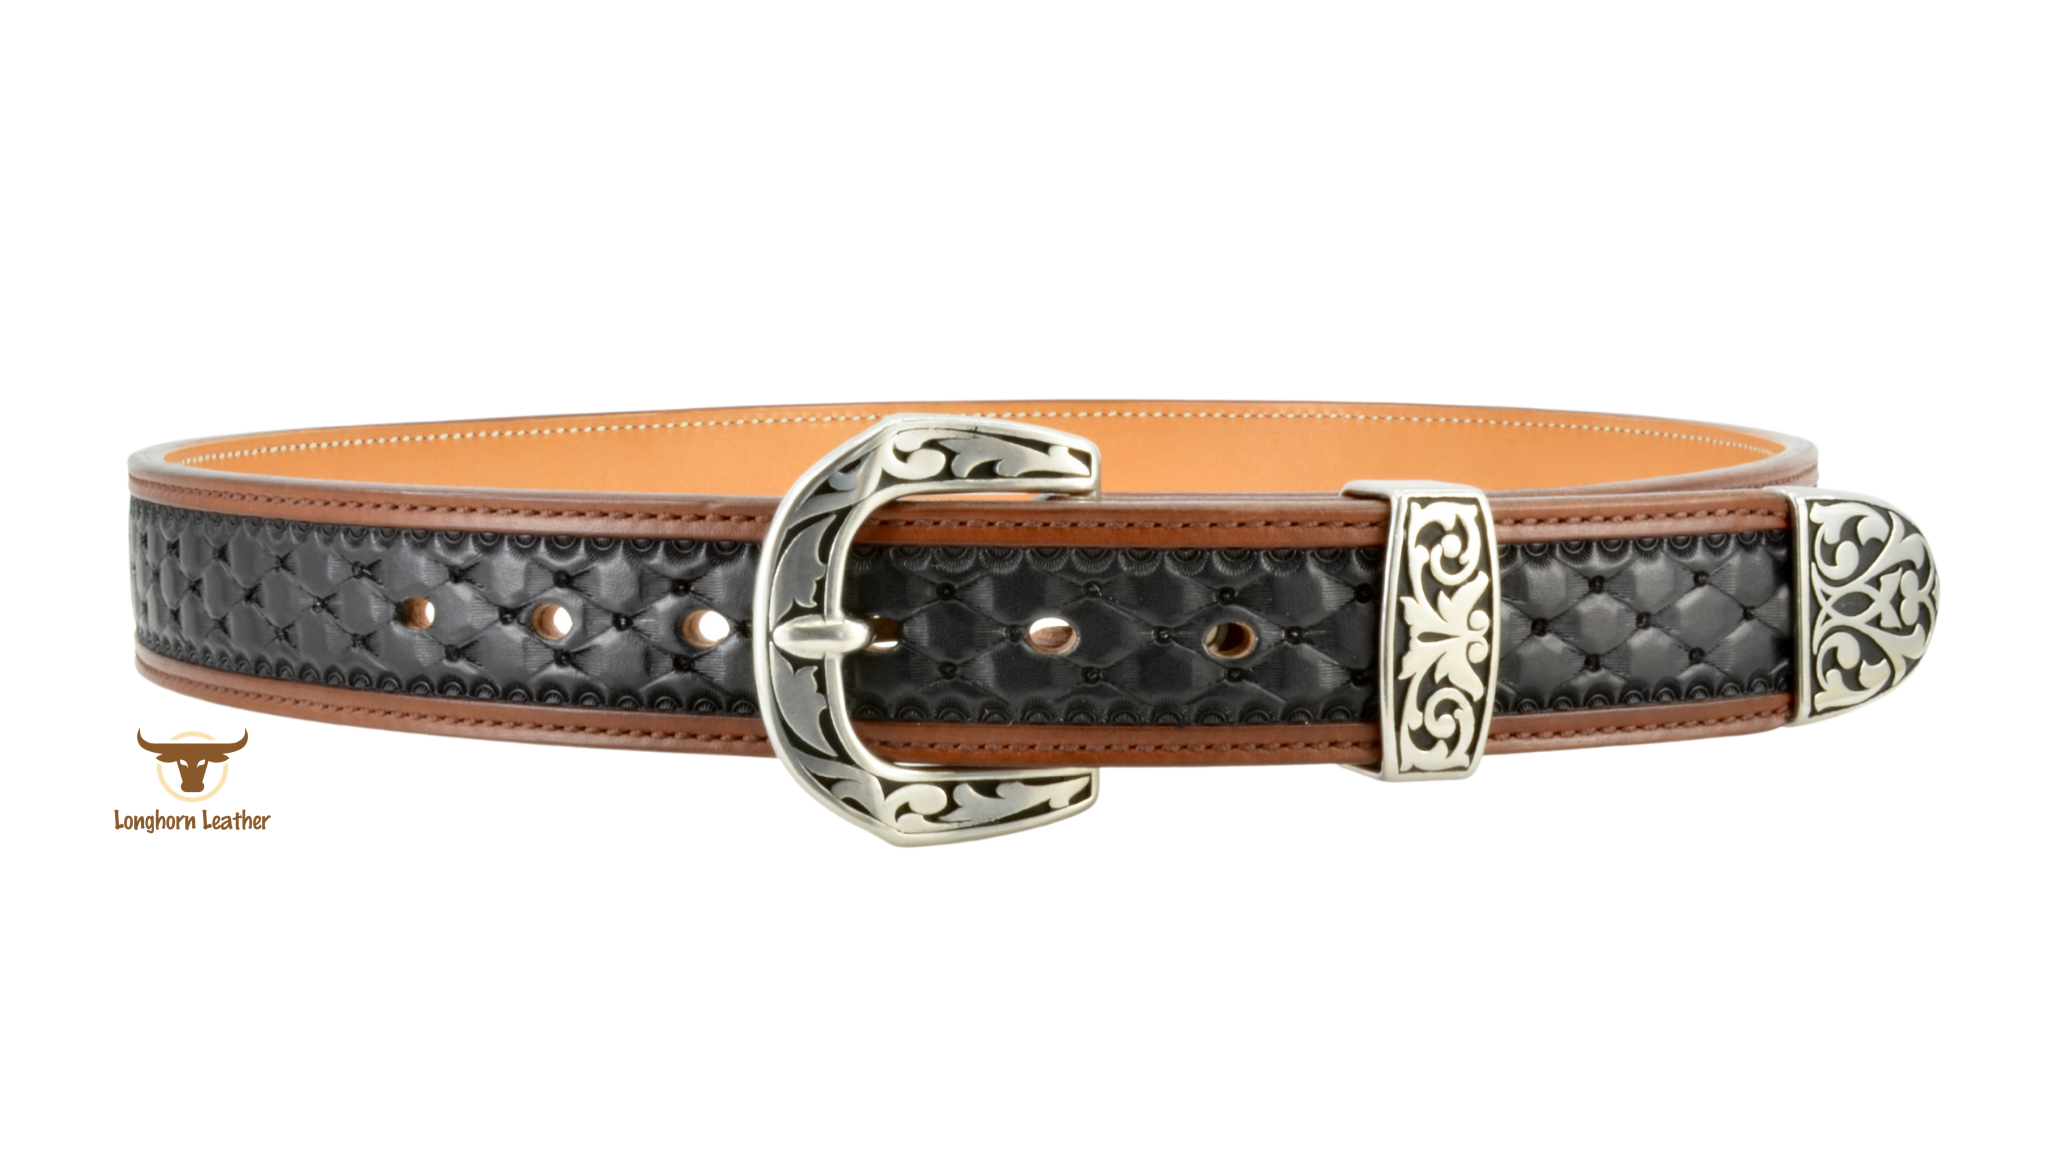 Longhorn Leather AZ-Custom Leather Gun Belt featuring the “Abilene